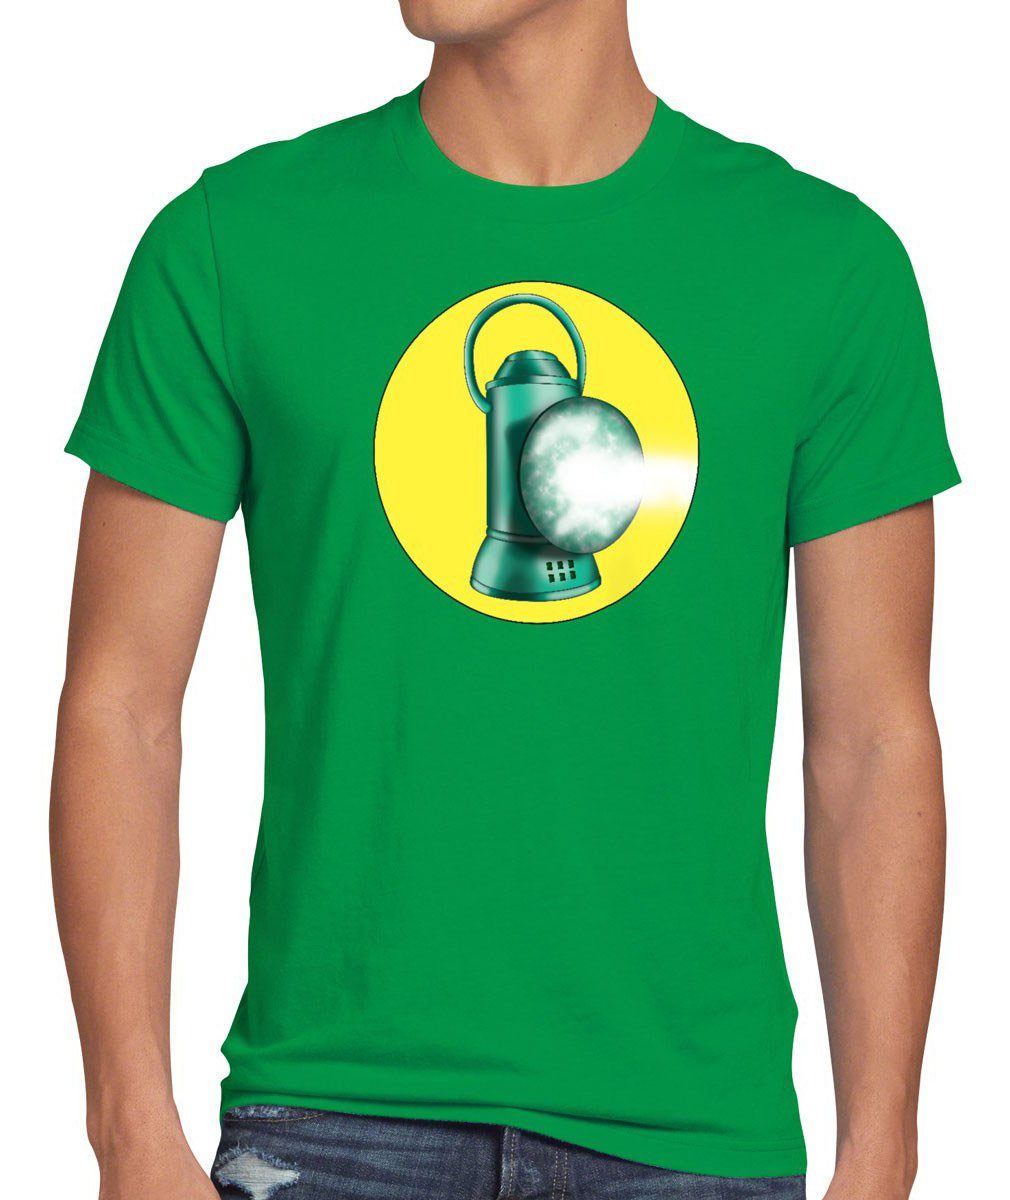 Theory Green Sheldon style3 Herren Cooper laterne Lantern dc Superheld Bang T-Shirt Print-Shirt Big grün